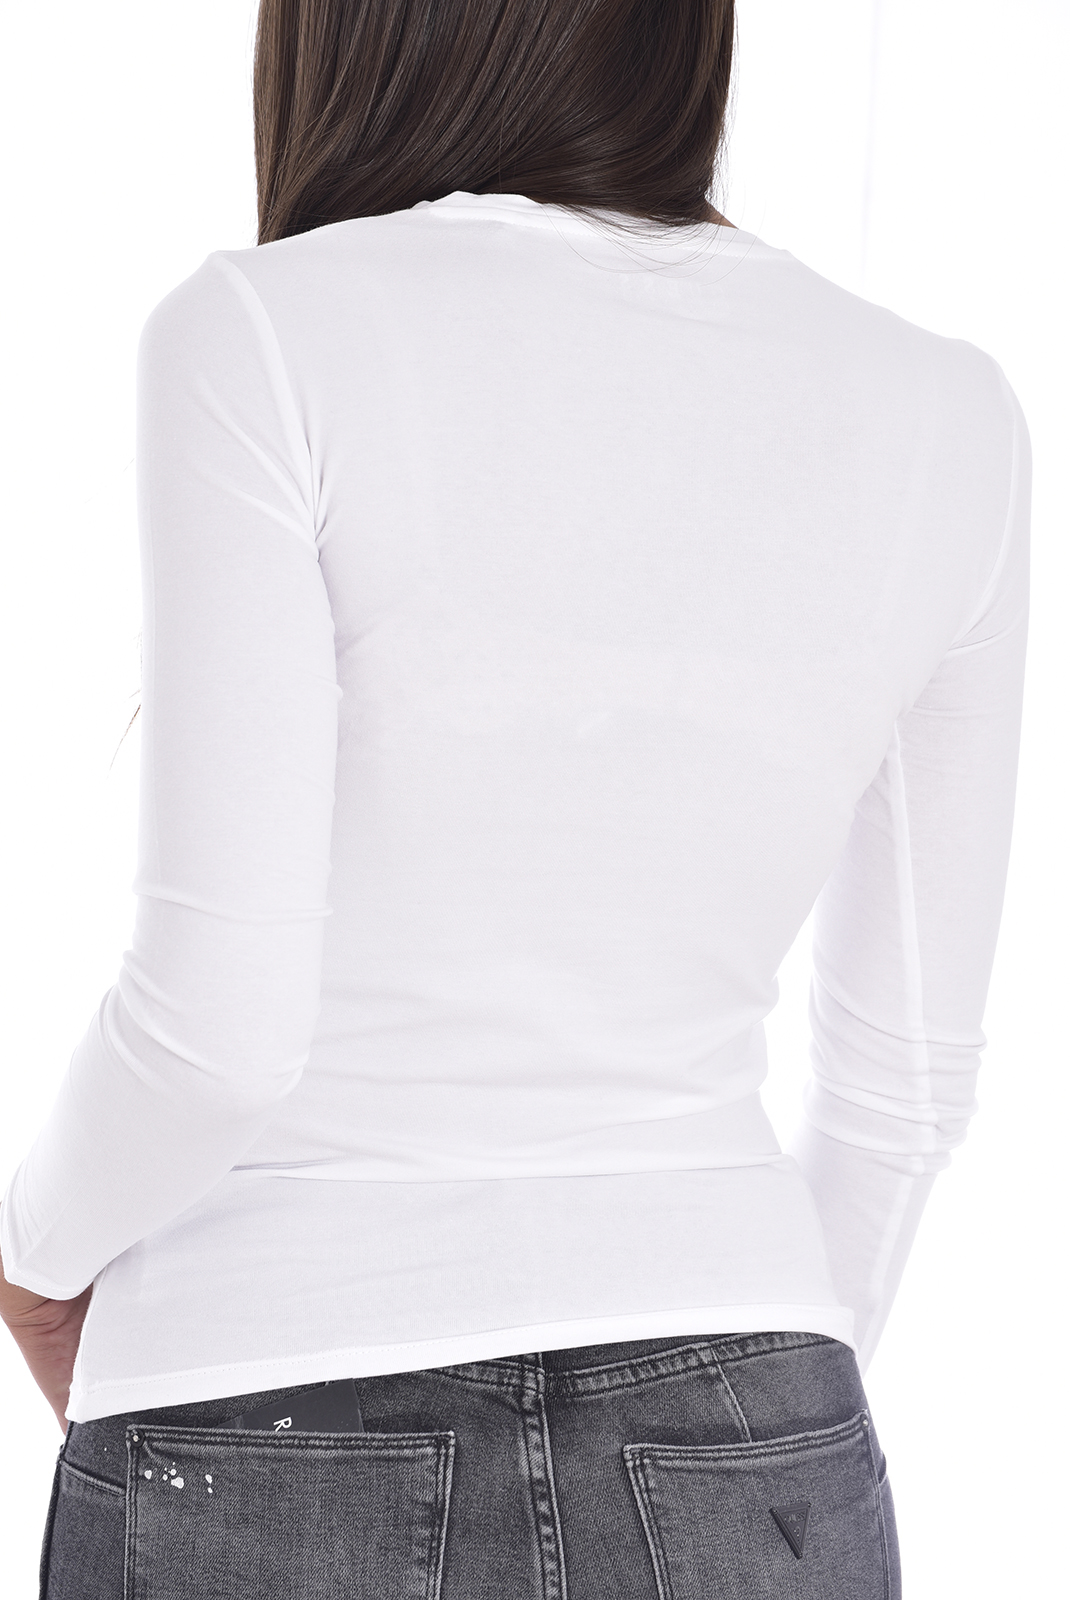  Tee-shirt Blanc à Manches Longues W1bi01 J1311 Guess Jeans